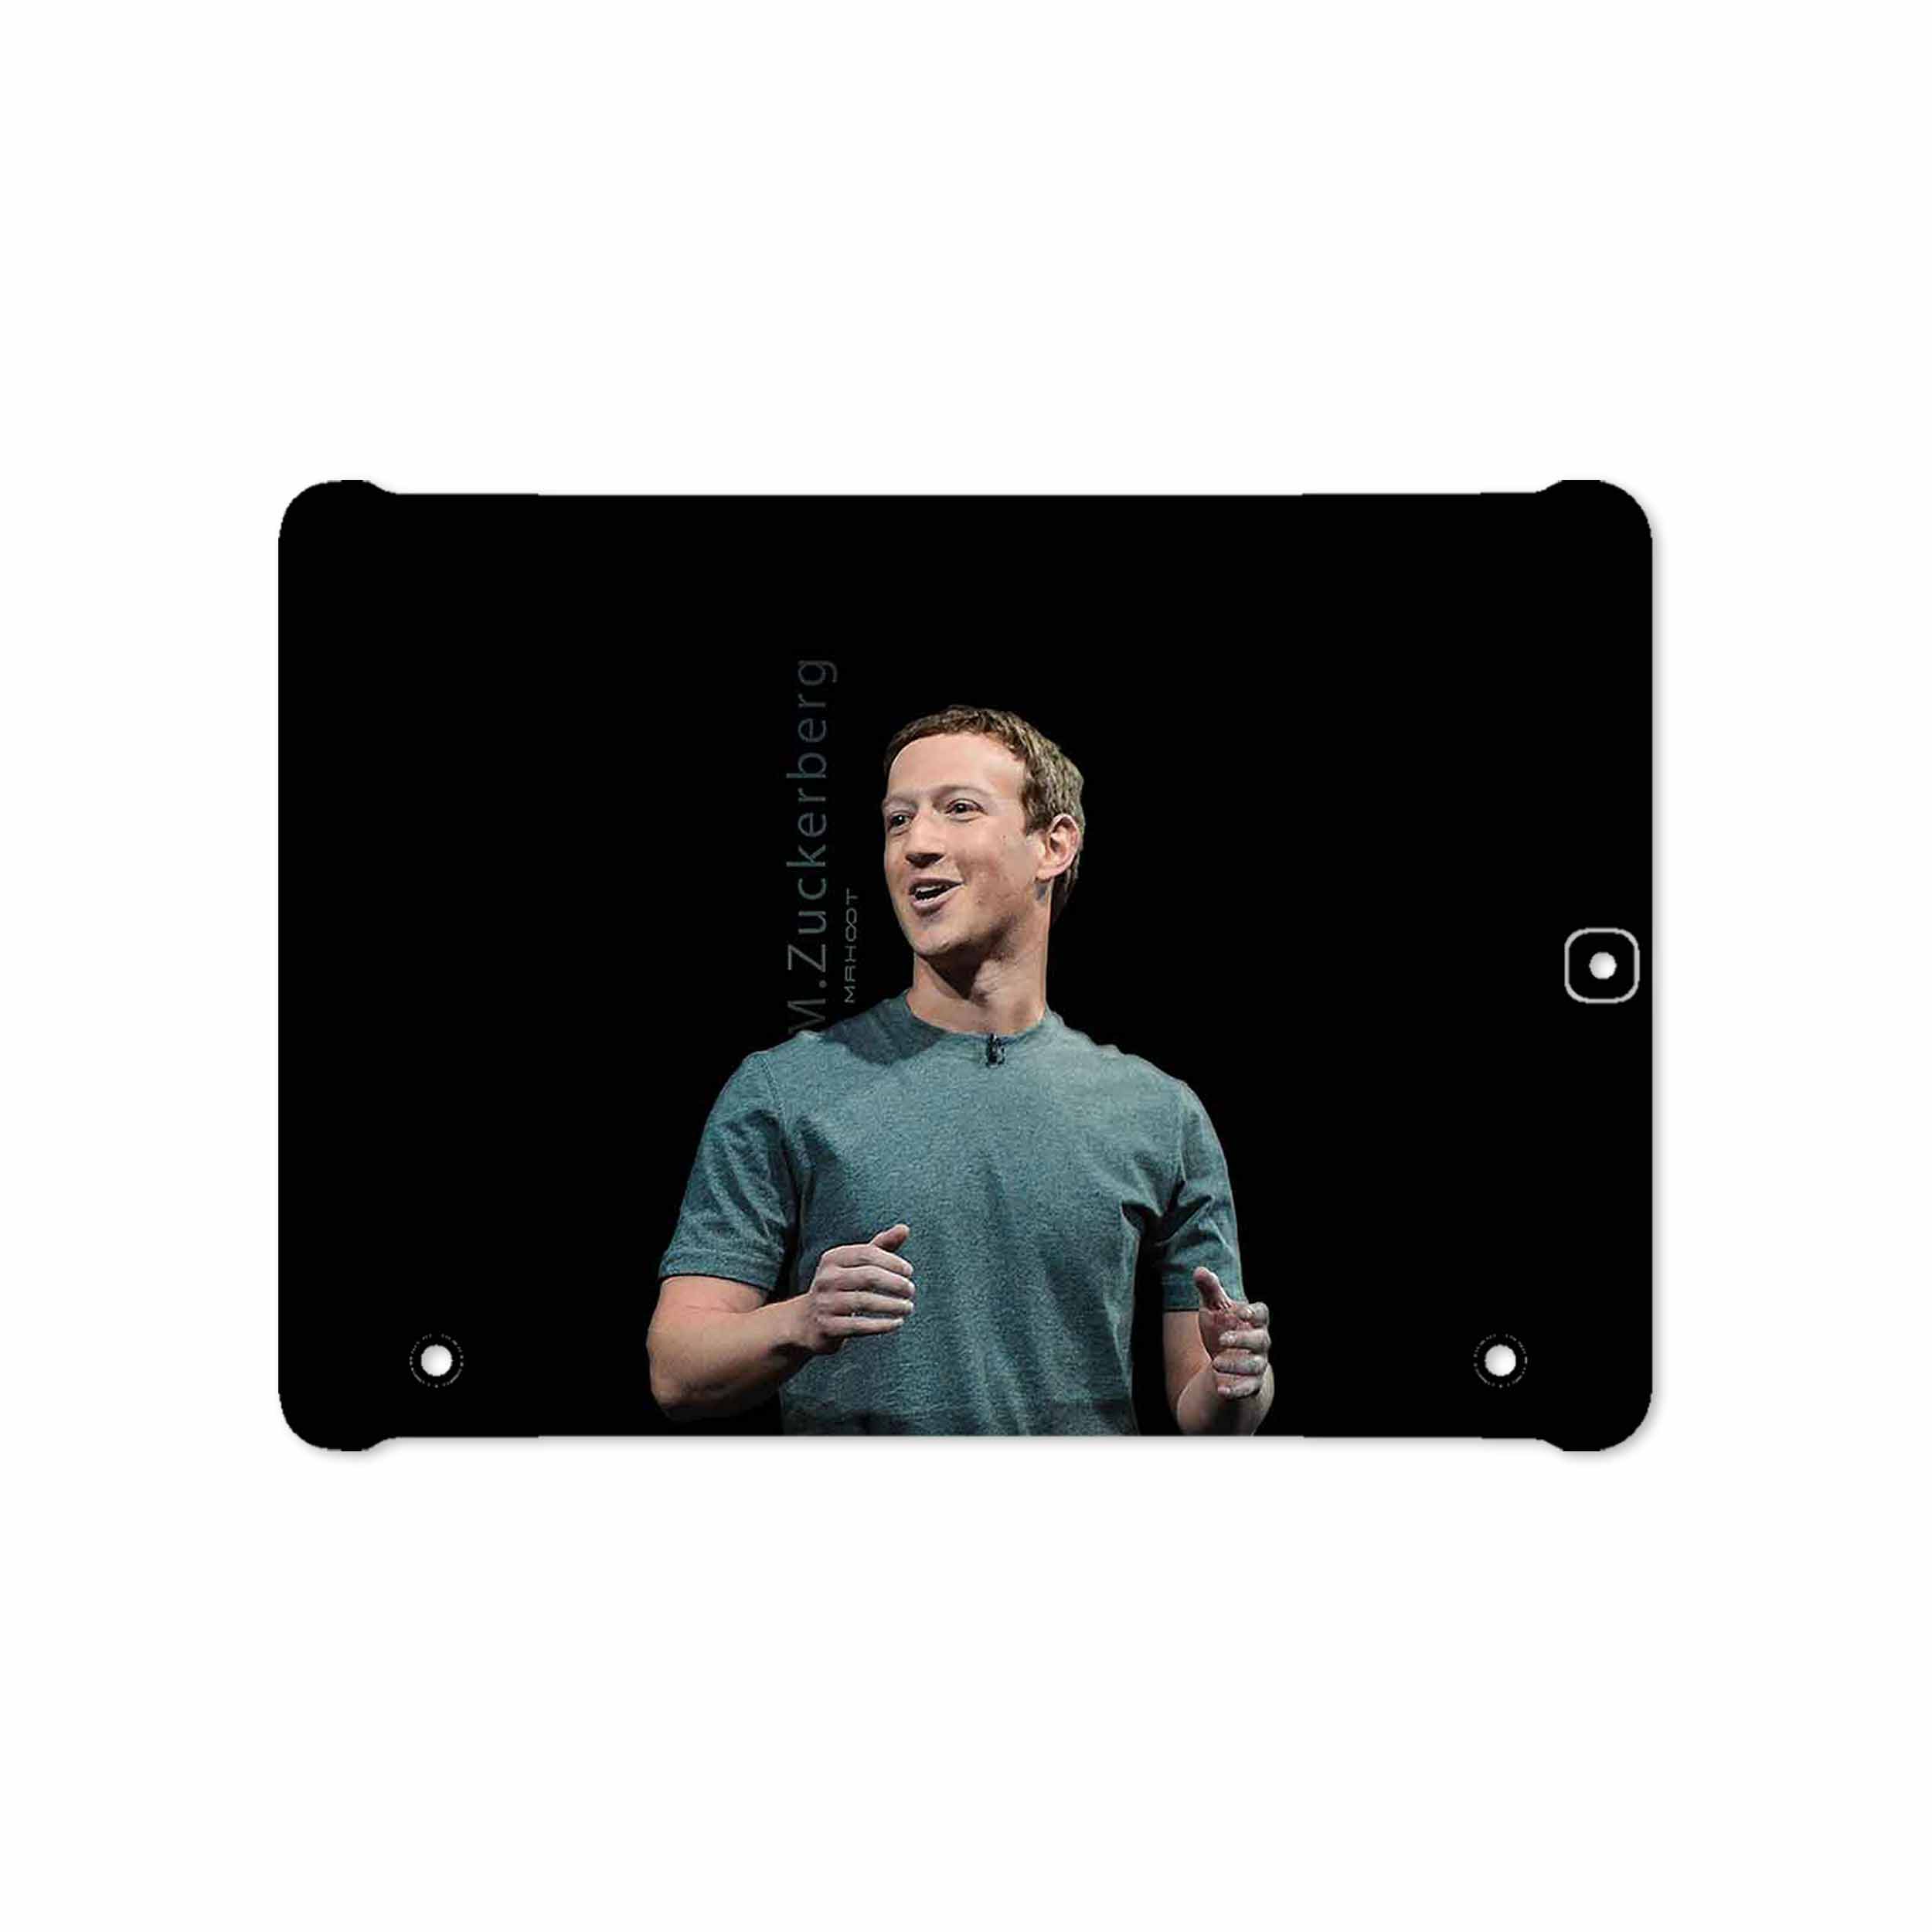 برچسب پوششی ماهوت مدل Mark Zuckerberg مناسب برای تبلت سامسونگ Galaxy Tab S2 9.7 2016 T819N